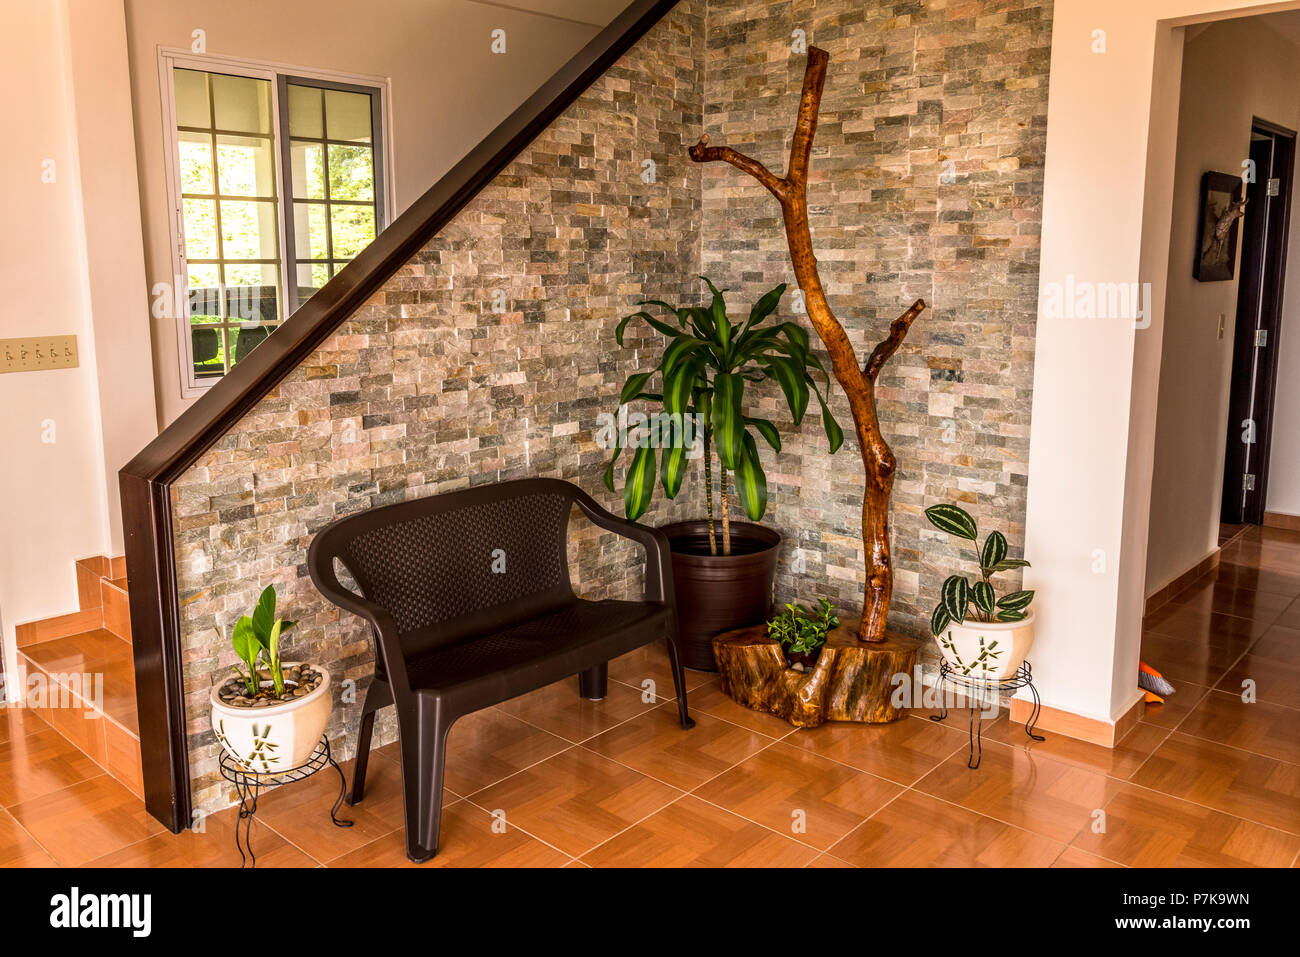 Interior decor design ideas stone wall plant and wood artwork Stock